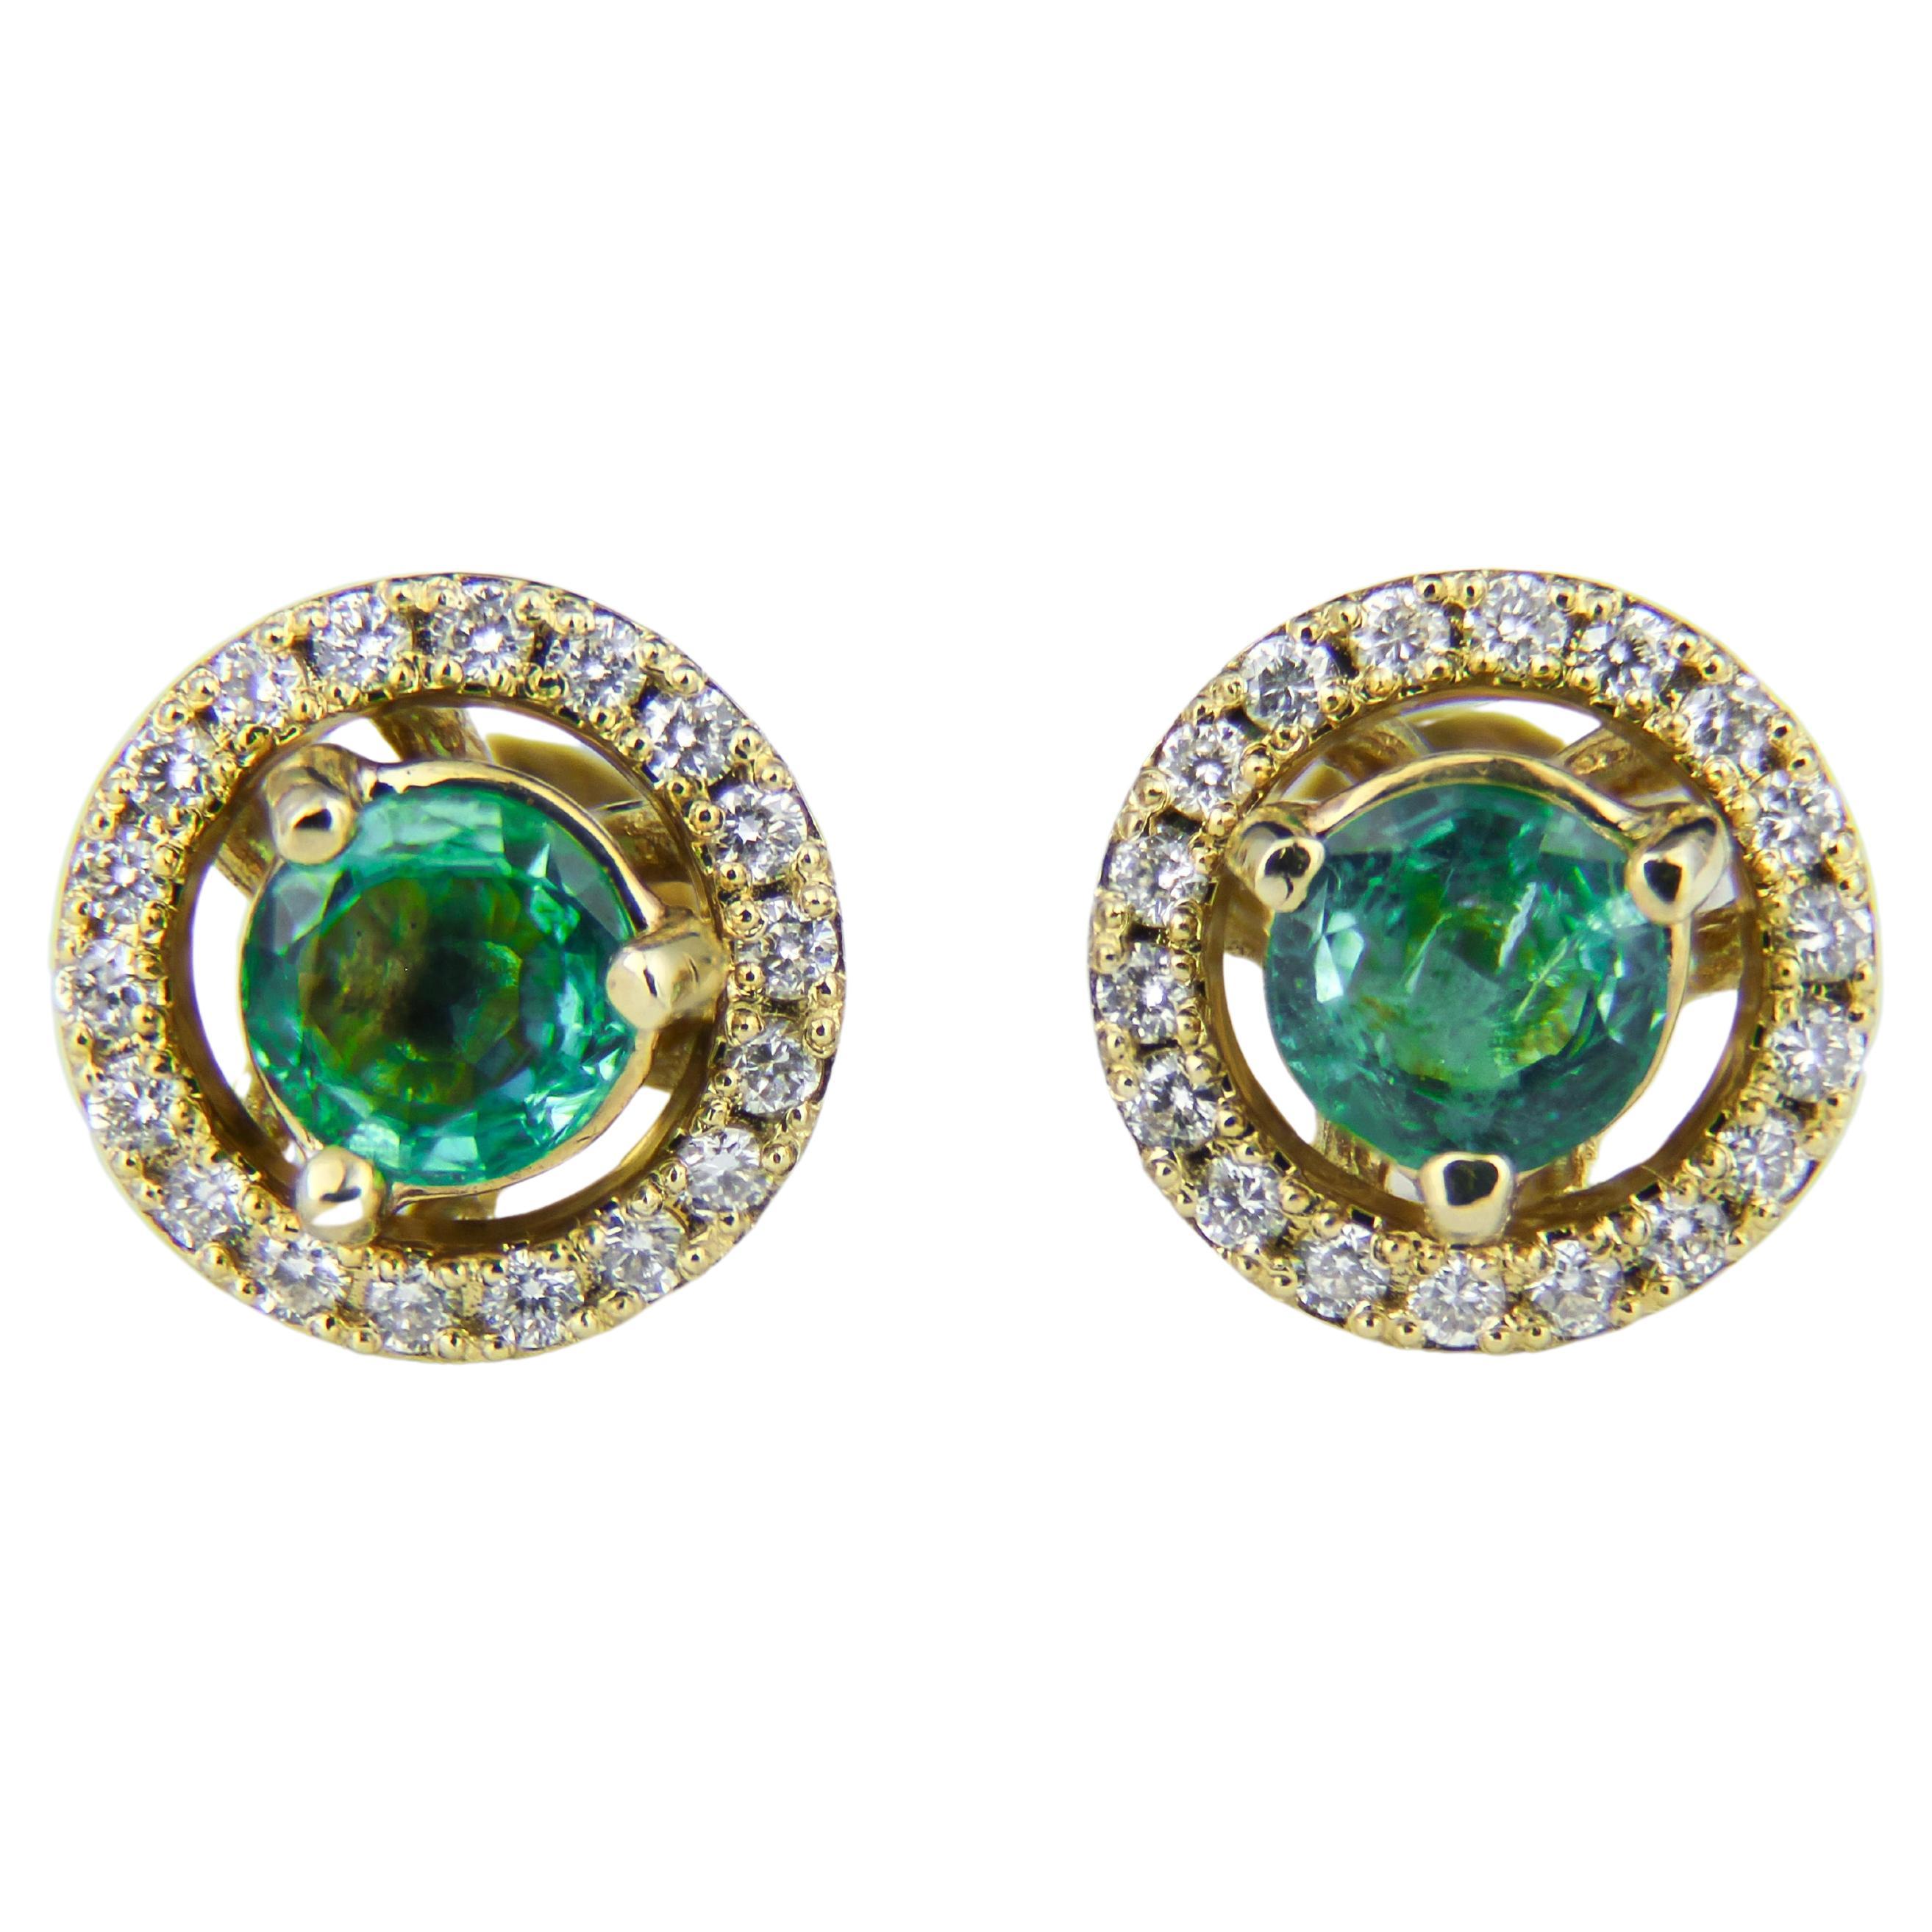 Emeralds 14k gold earrings studs. For Sale